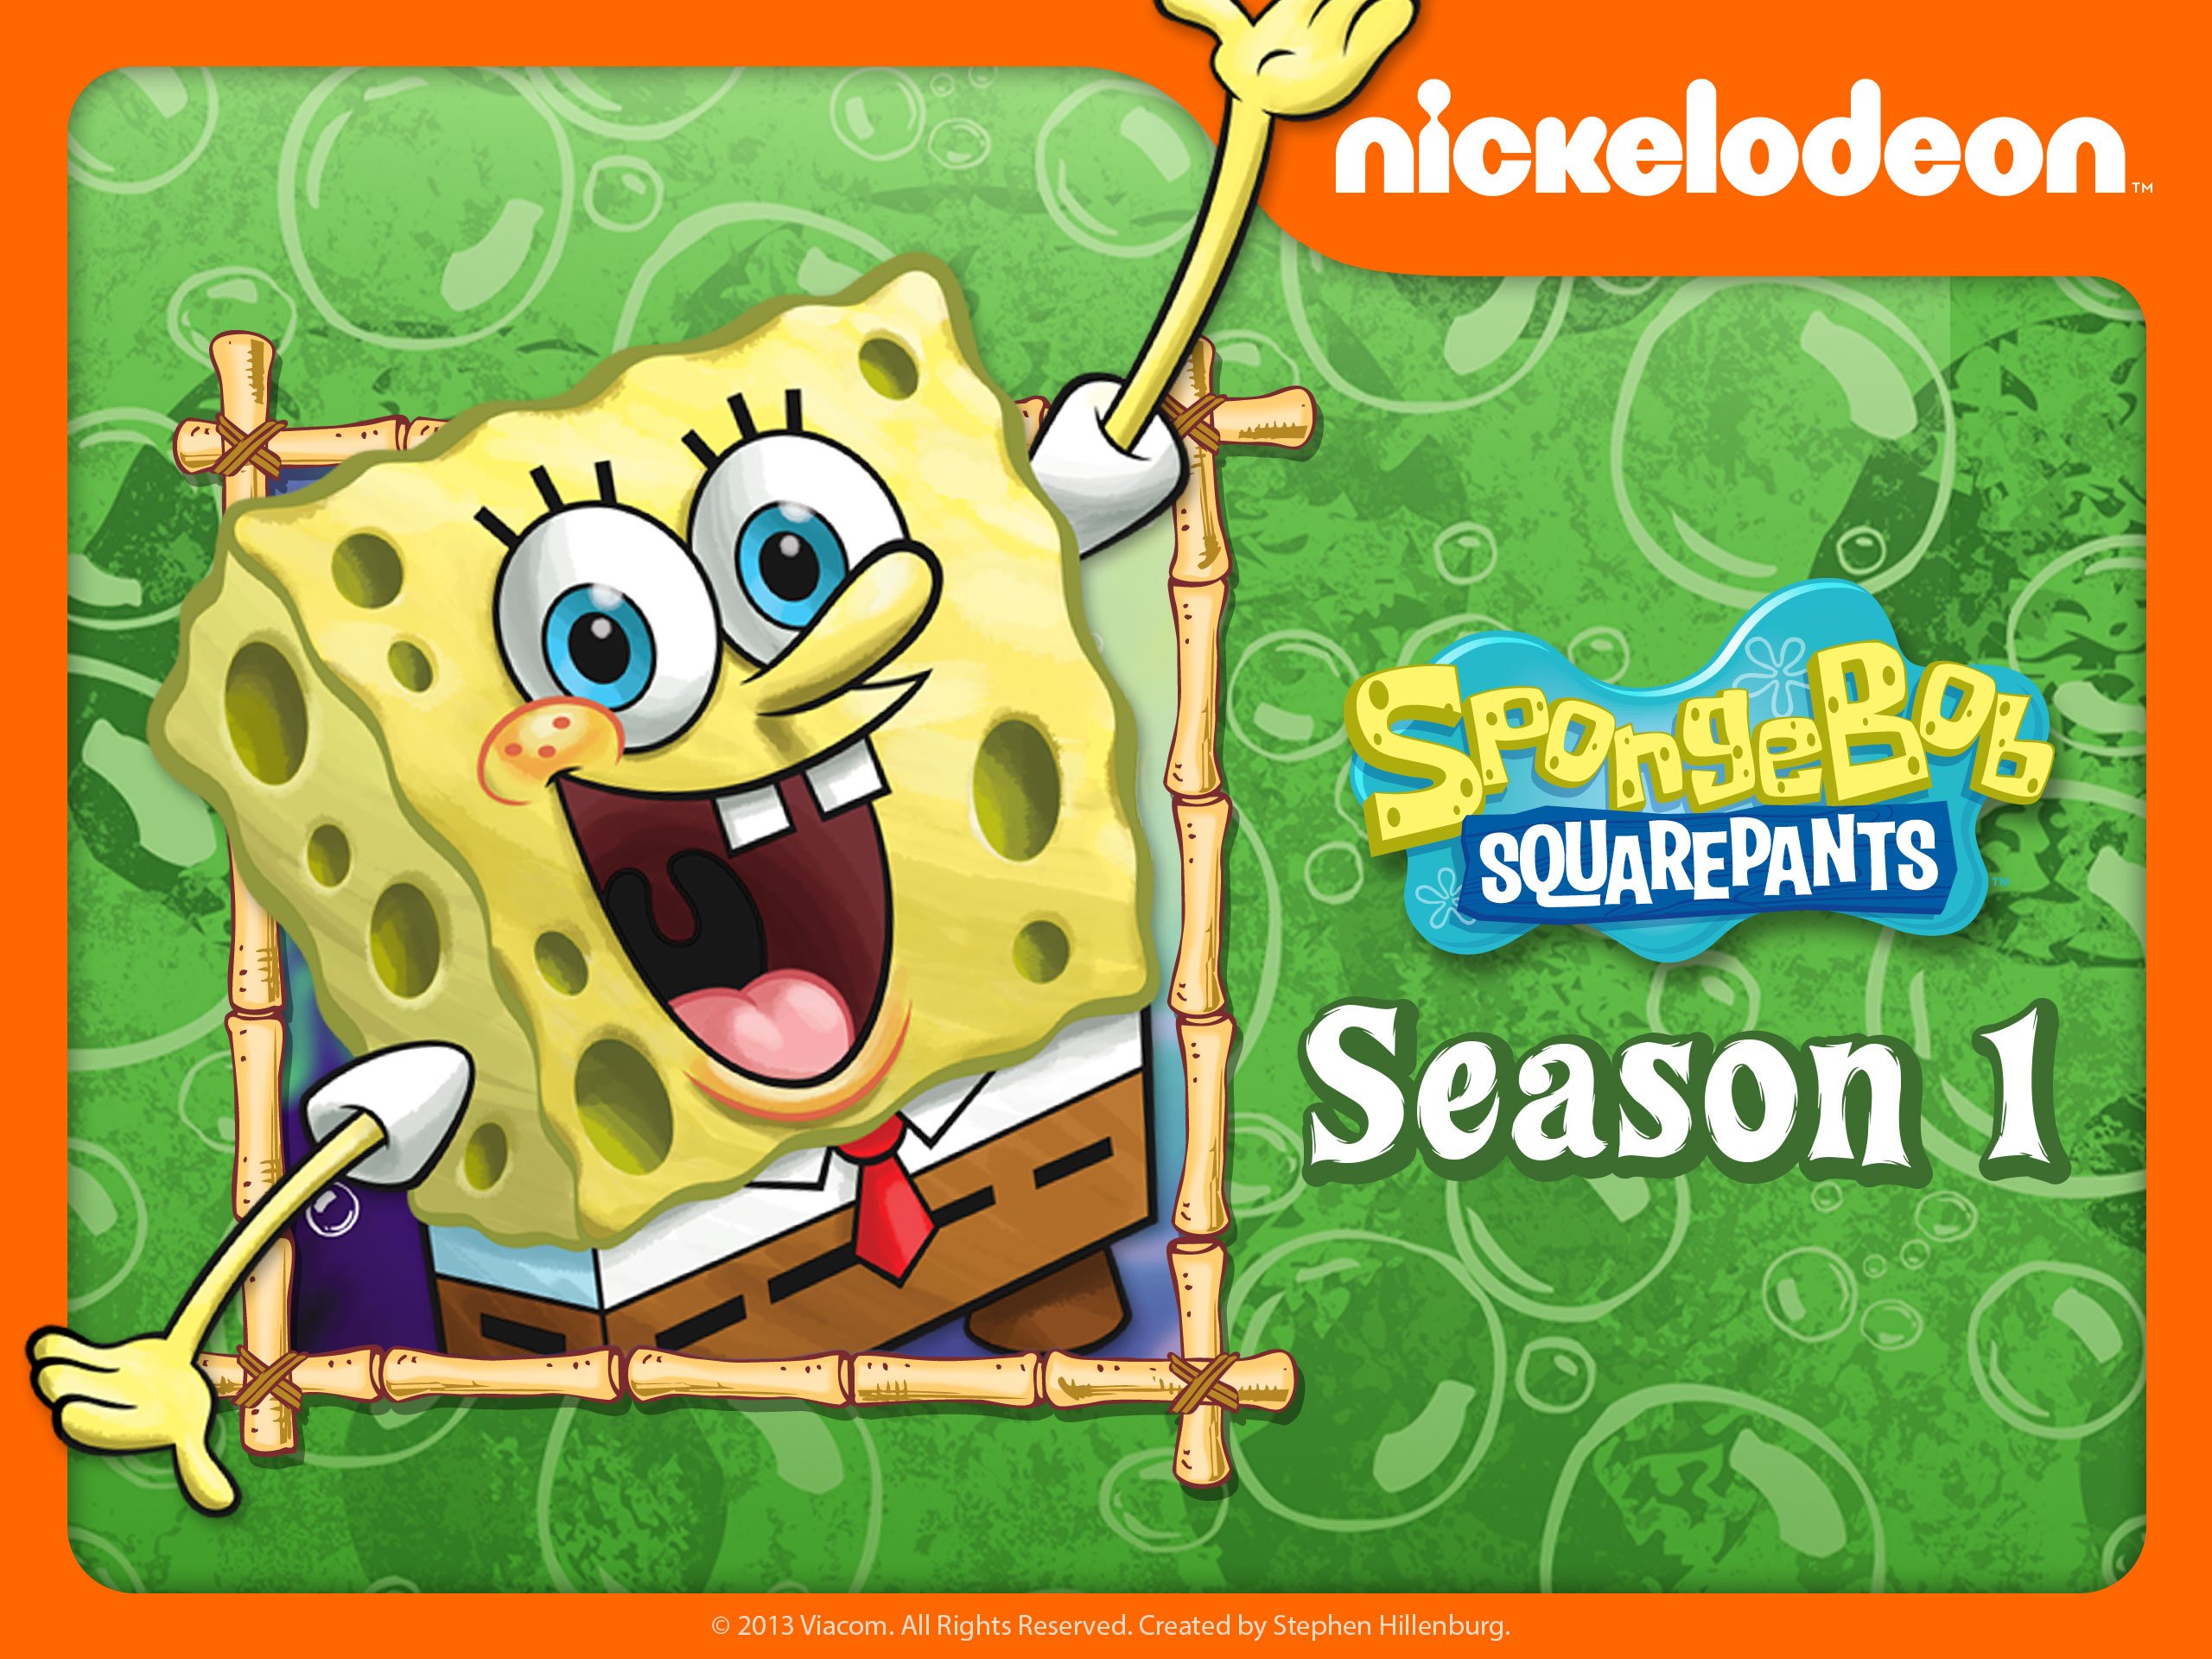 watch spongebob squarepants episodes season 3